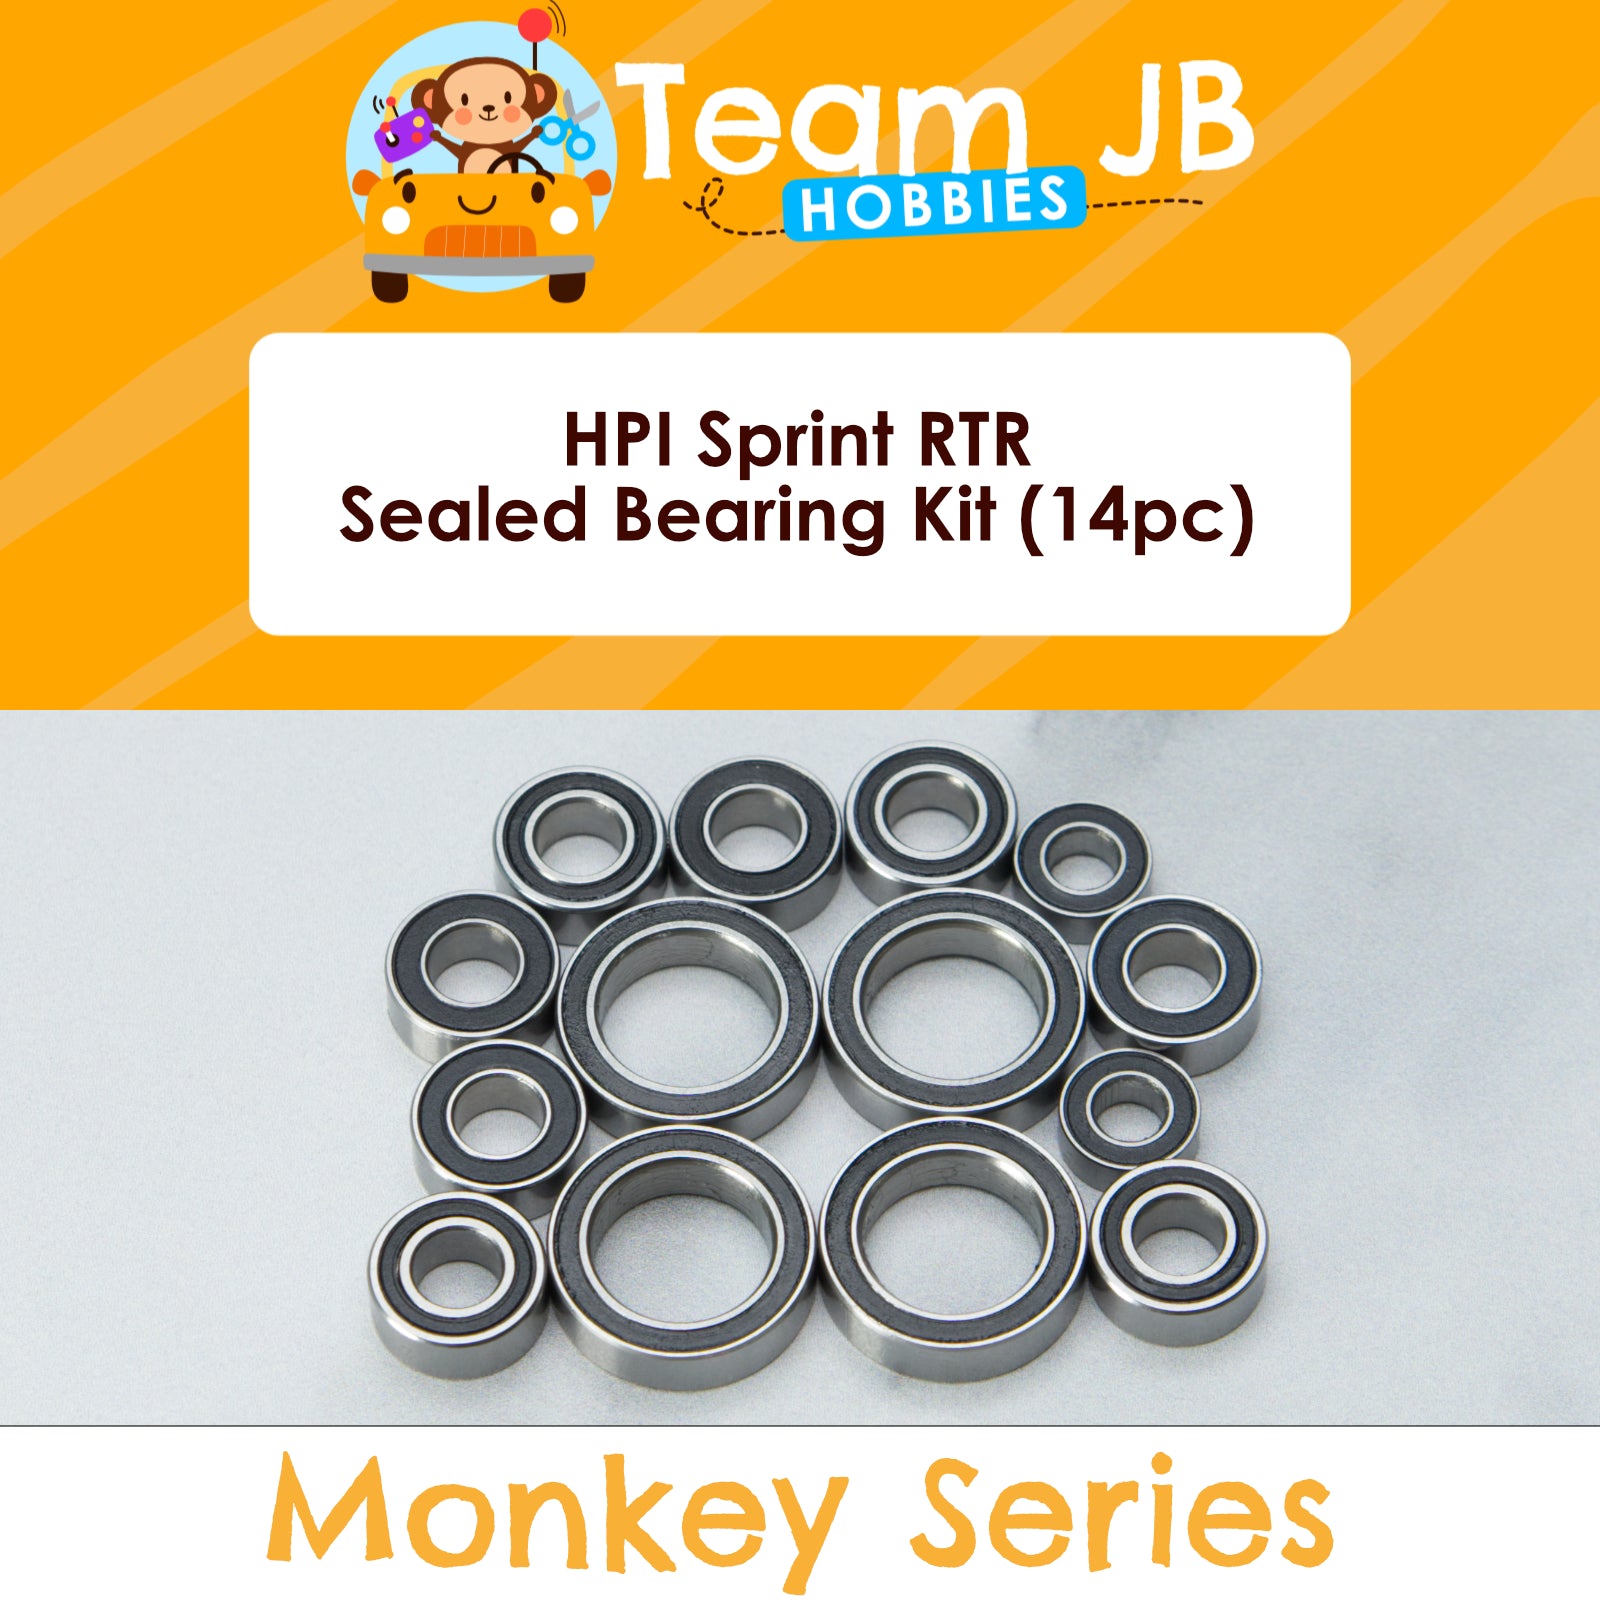 HPI Sprint RTR - Sealed Bearing Kit